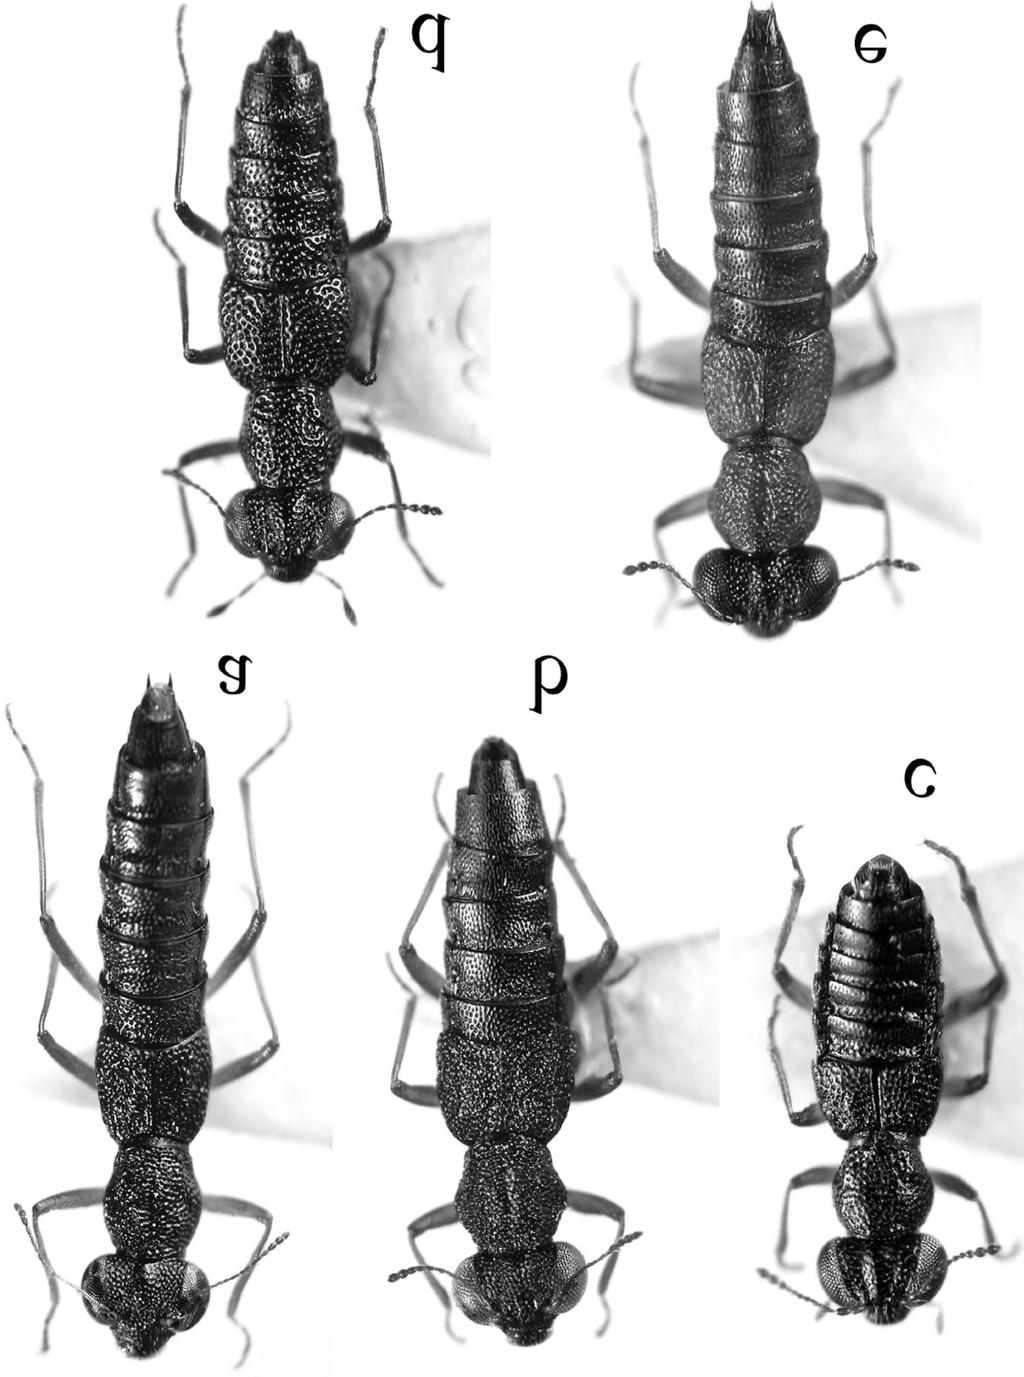 ENTOMOL. FENNICA Vol. 20 Five new Stenus species from China 193 Fig. 1. Adult habitus. a.stenus (Hypostenus) hui sp. n., female. b. S. (Hypostenus) alioventralis sp. n., female. c. S. (Hemistenus) fortunatoris sp.